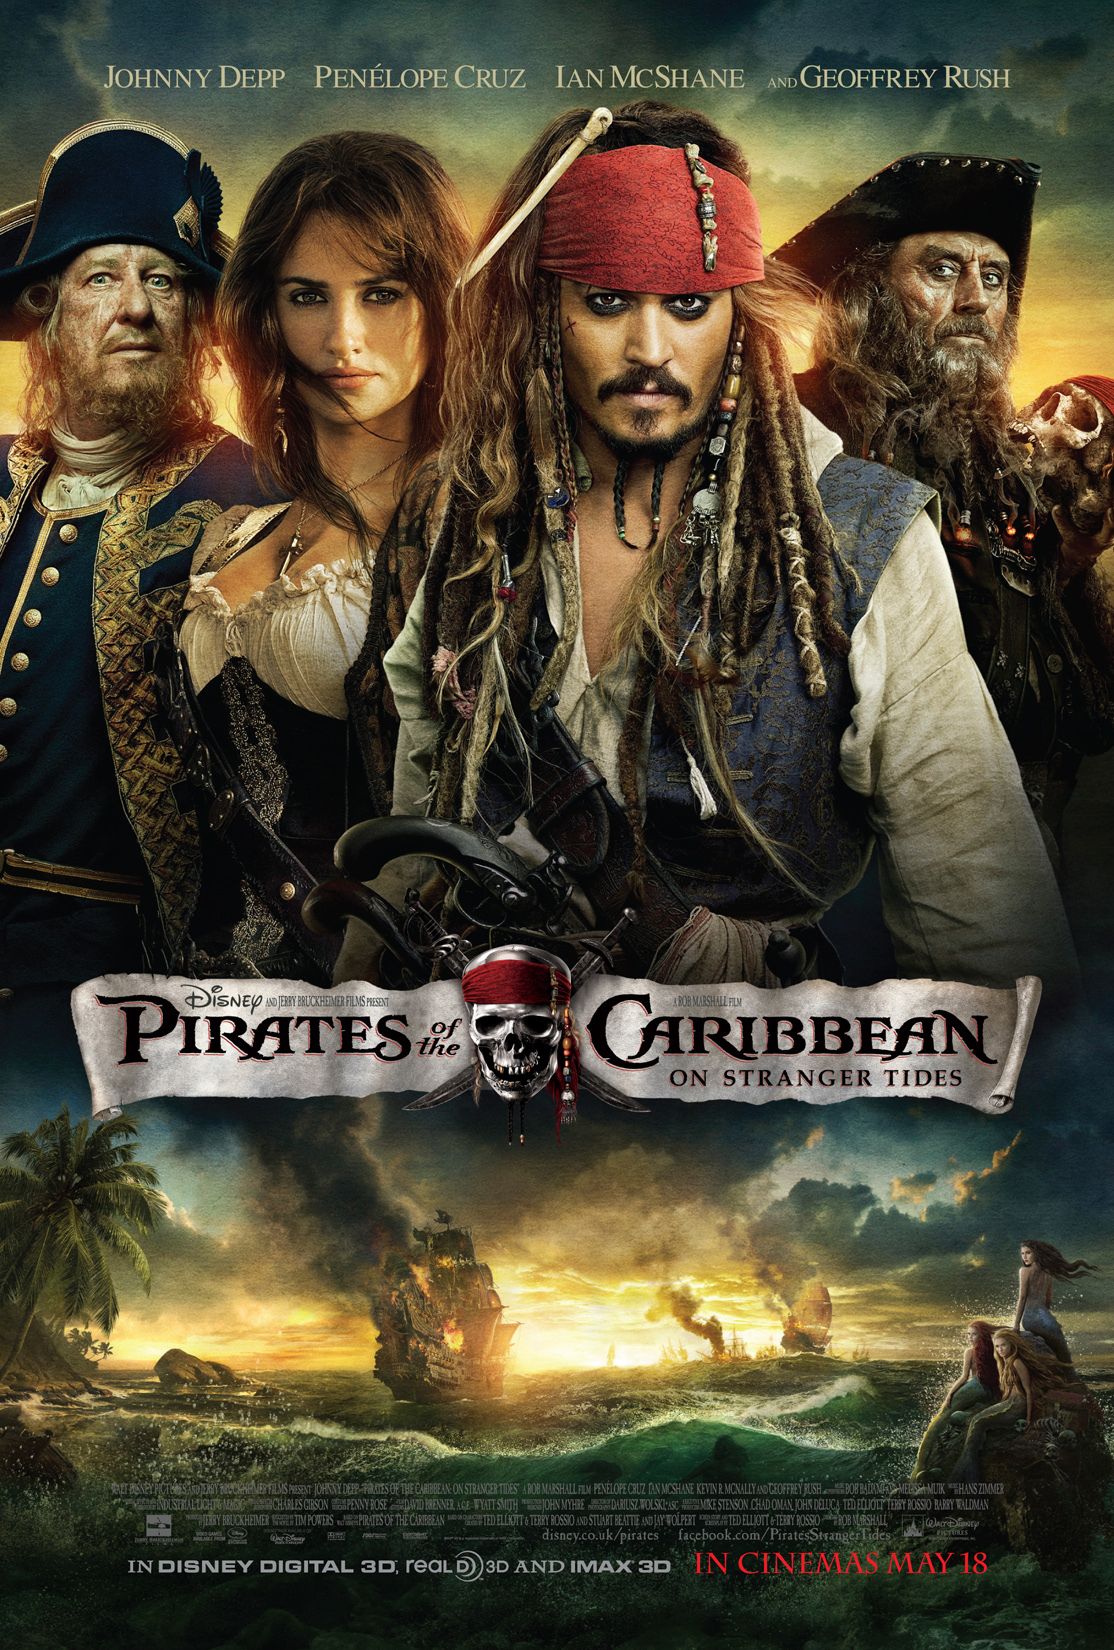 Johnny Depp, Peneloppe Cruz, Ian McShane, and Geoffrey Rush in Pirates of the Caribbean 